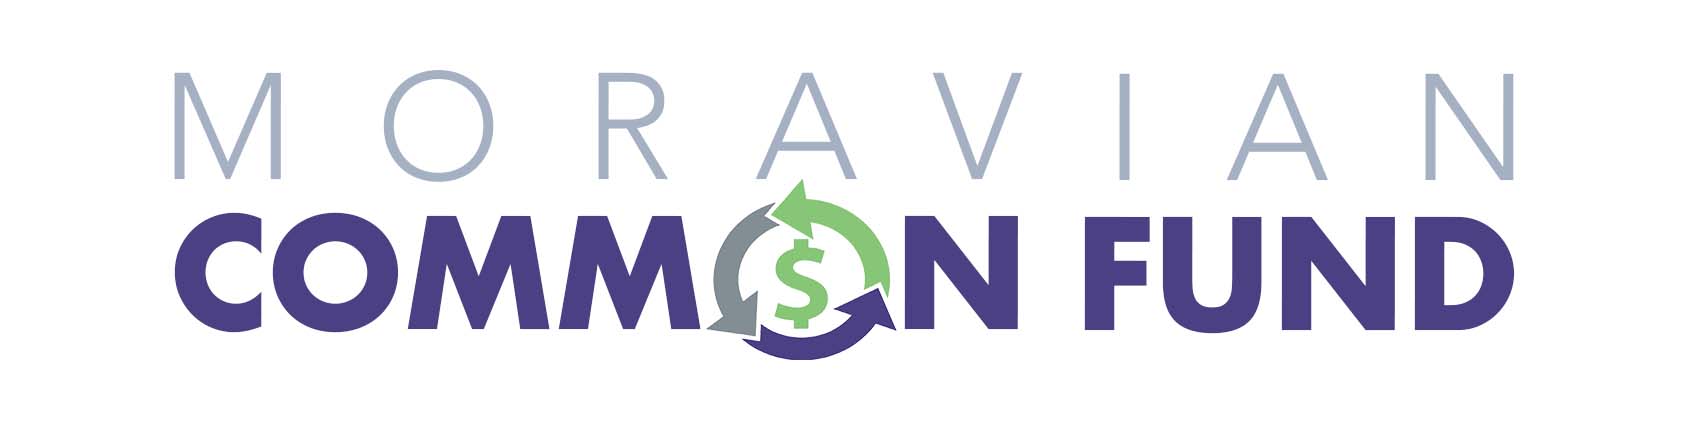 Moravian Common Fund logo.